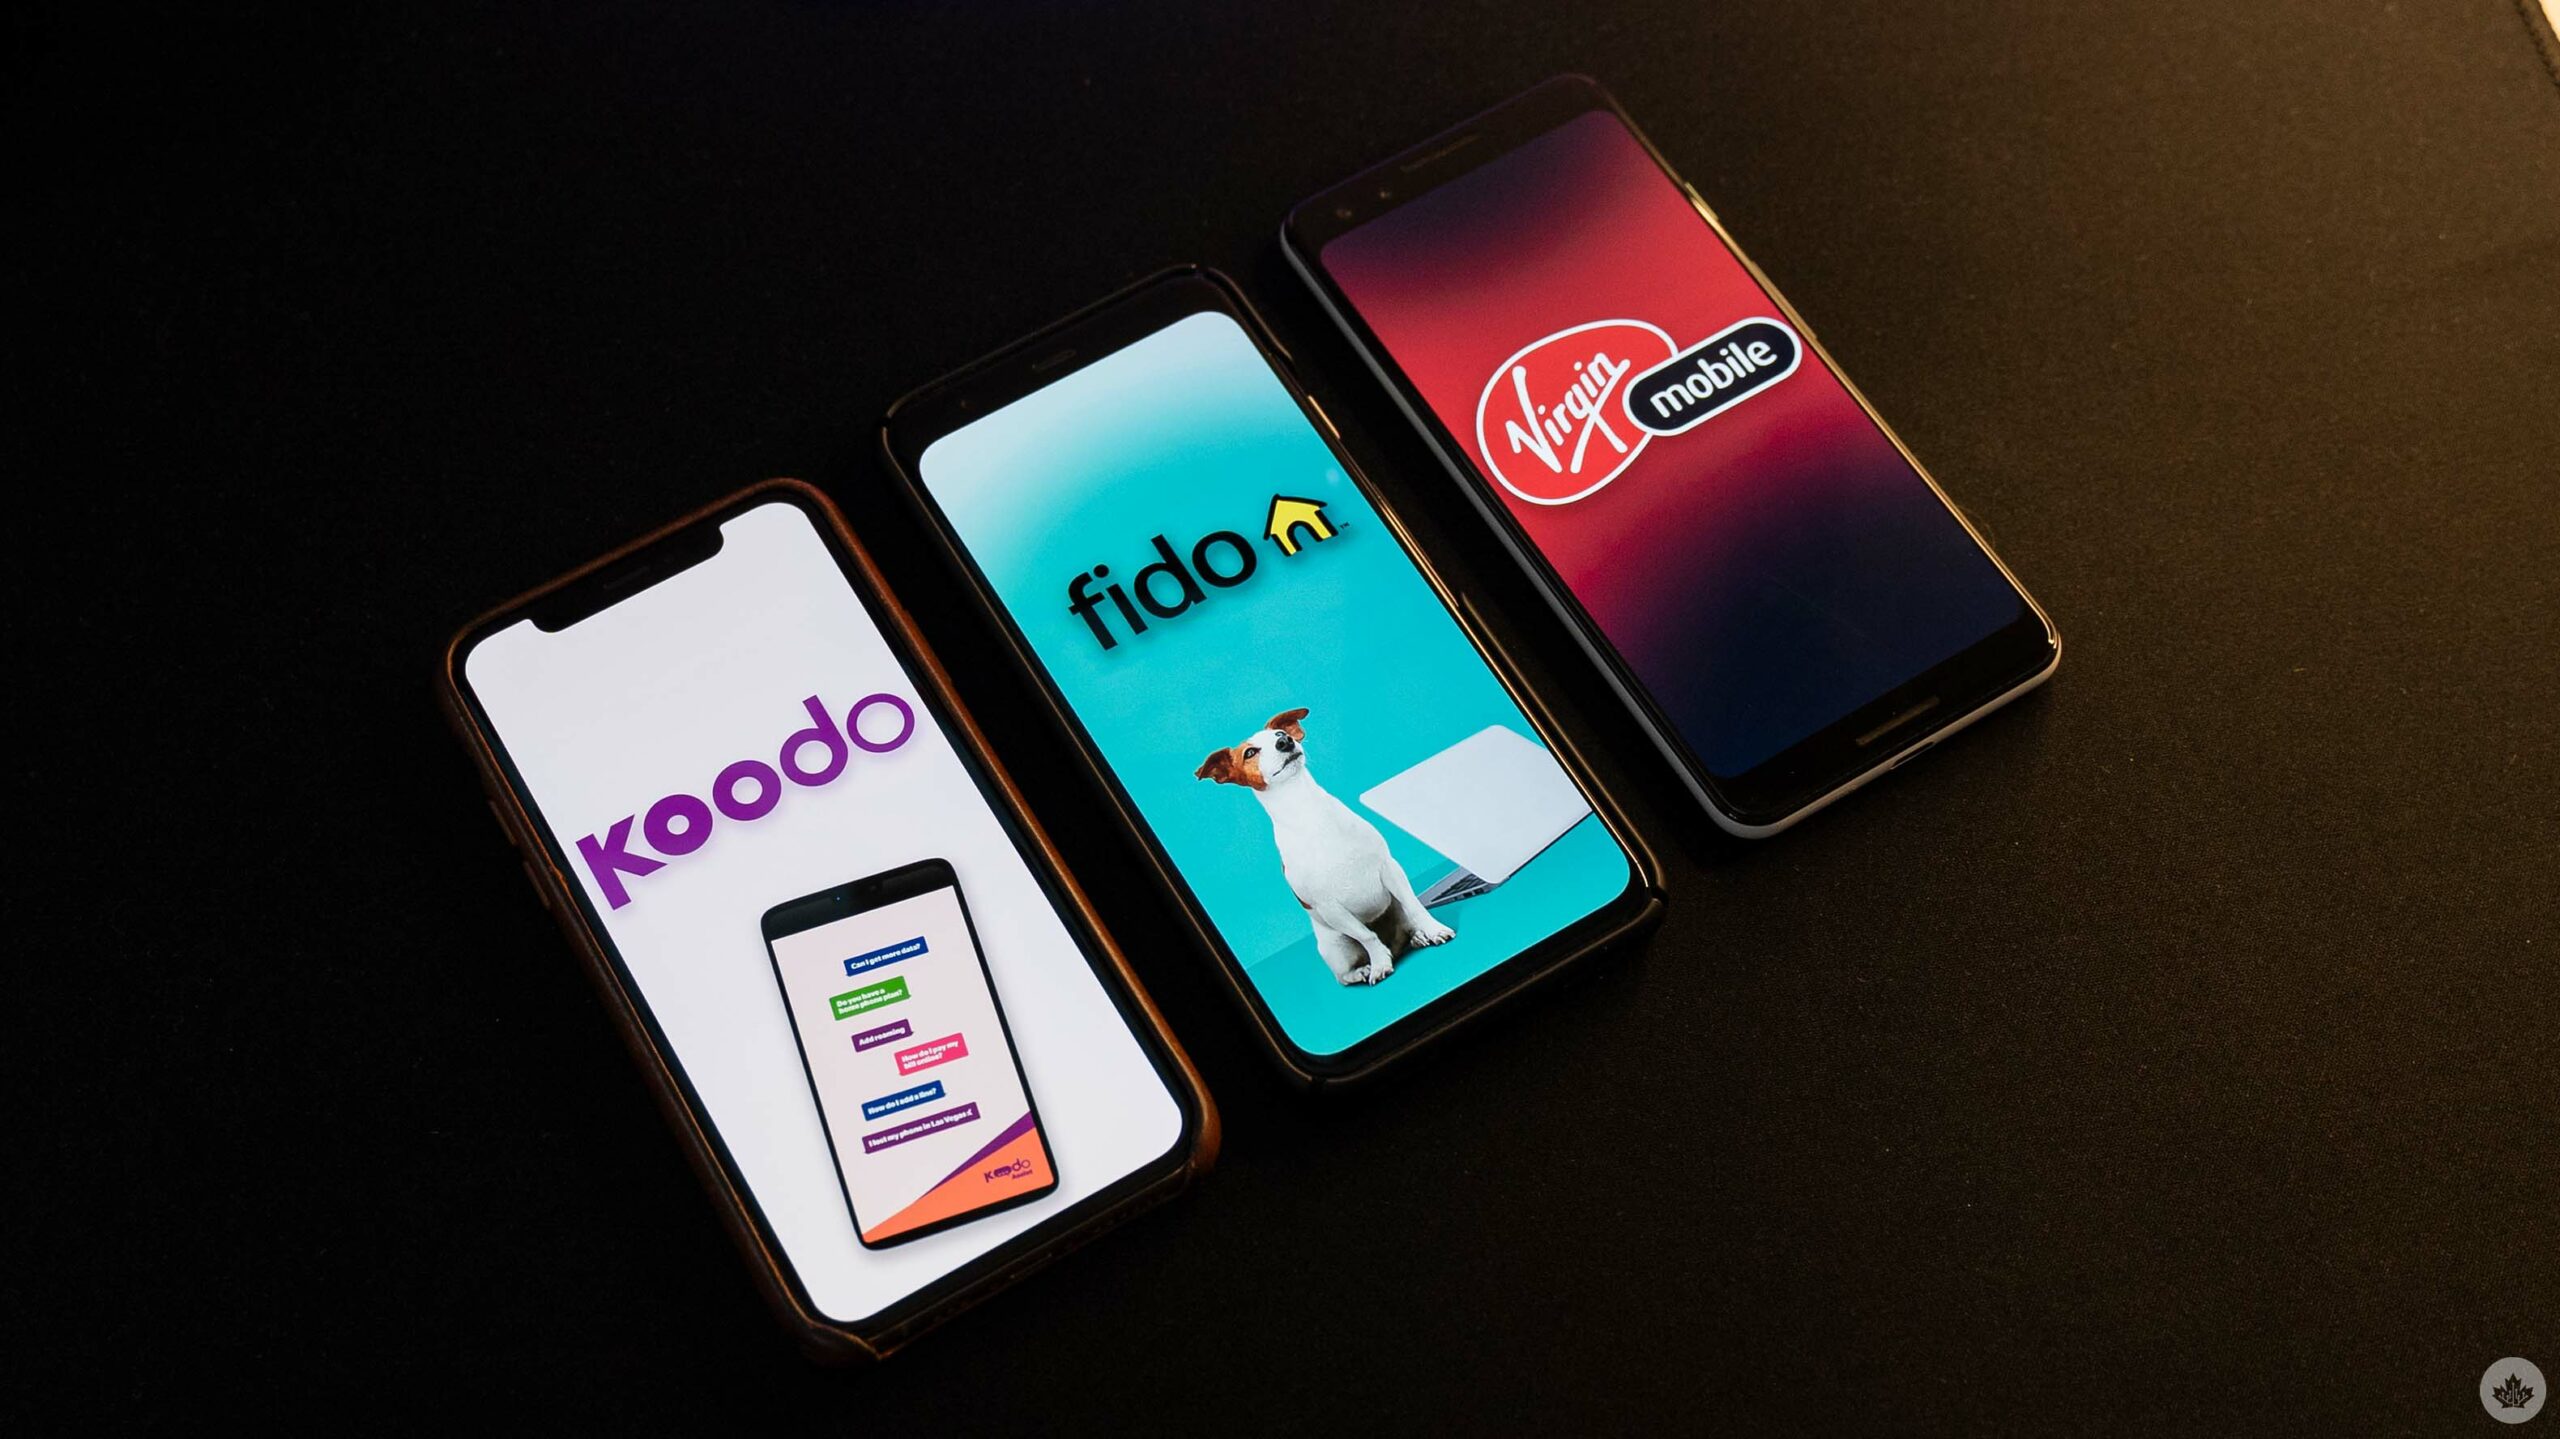 Koodo, Fido and Virgin Plus logos on smartphones.